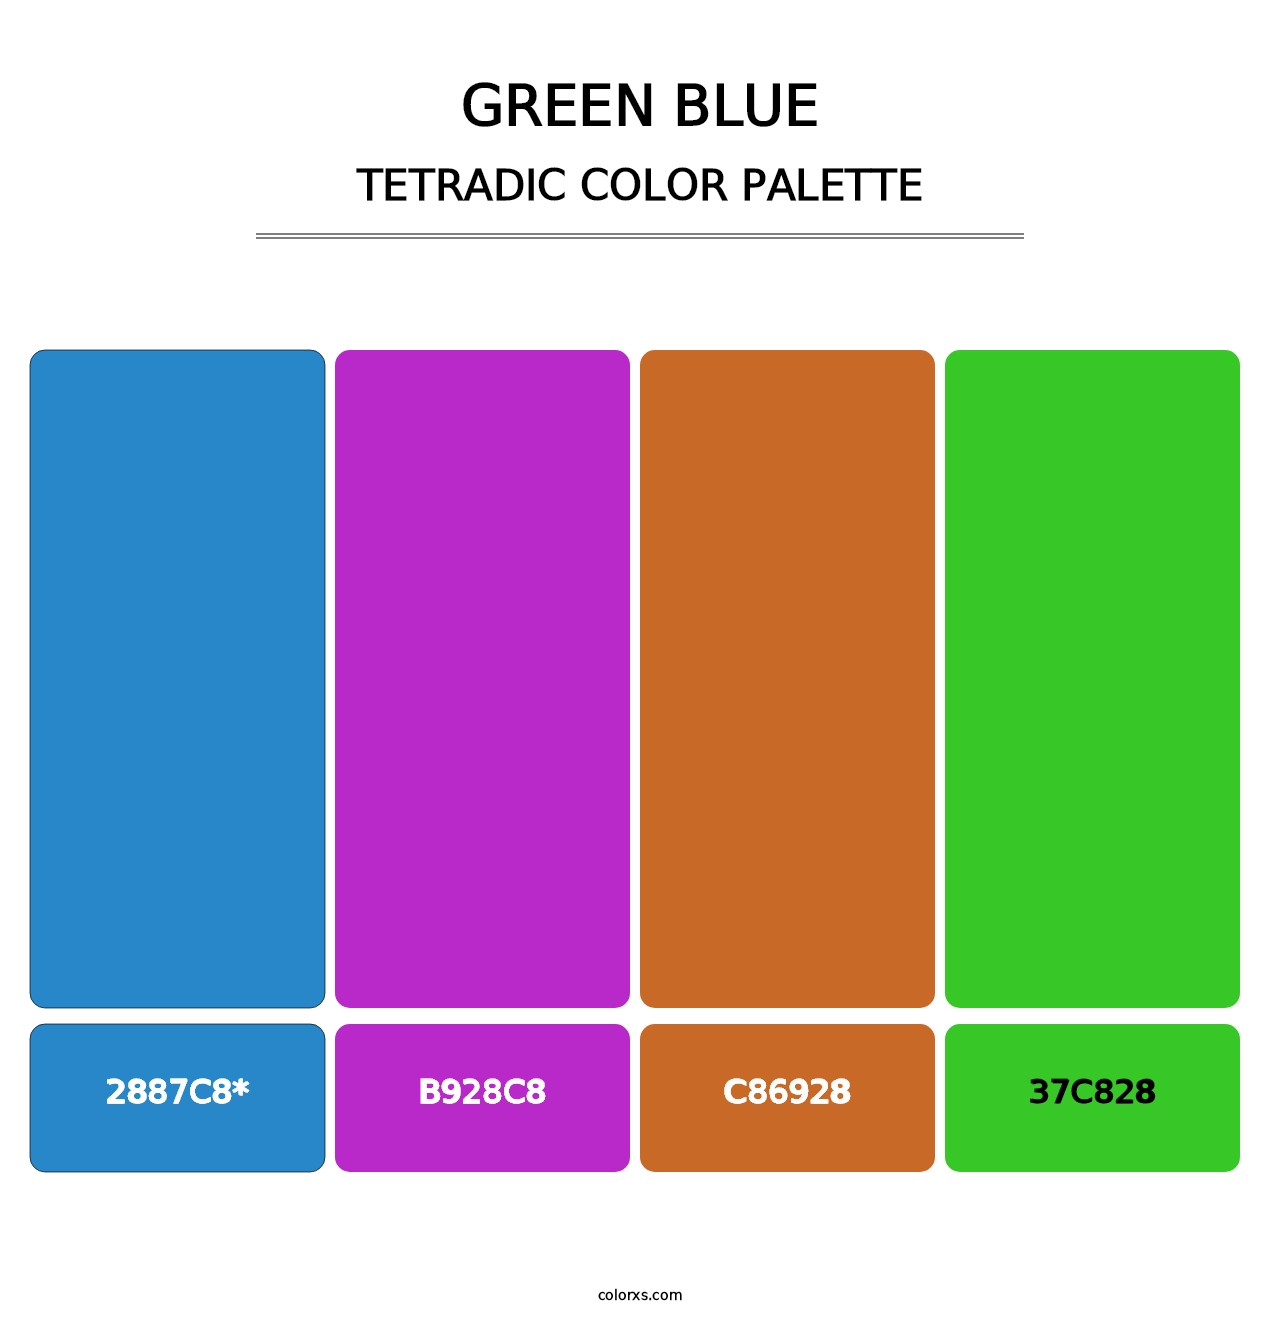 Green Blue - Tetradic Color Palette